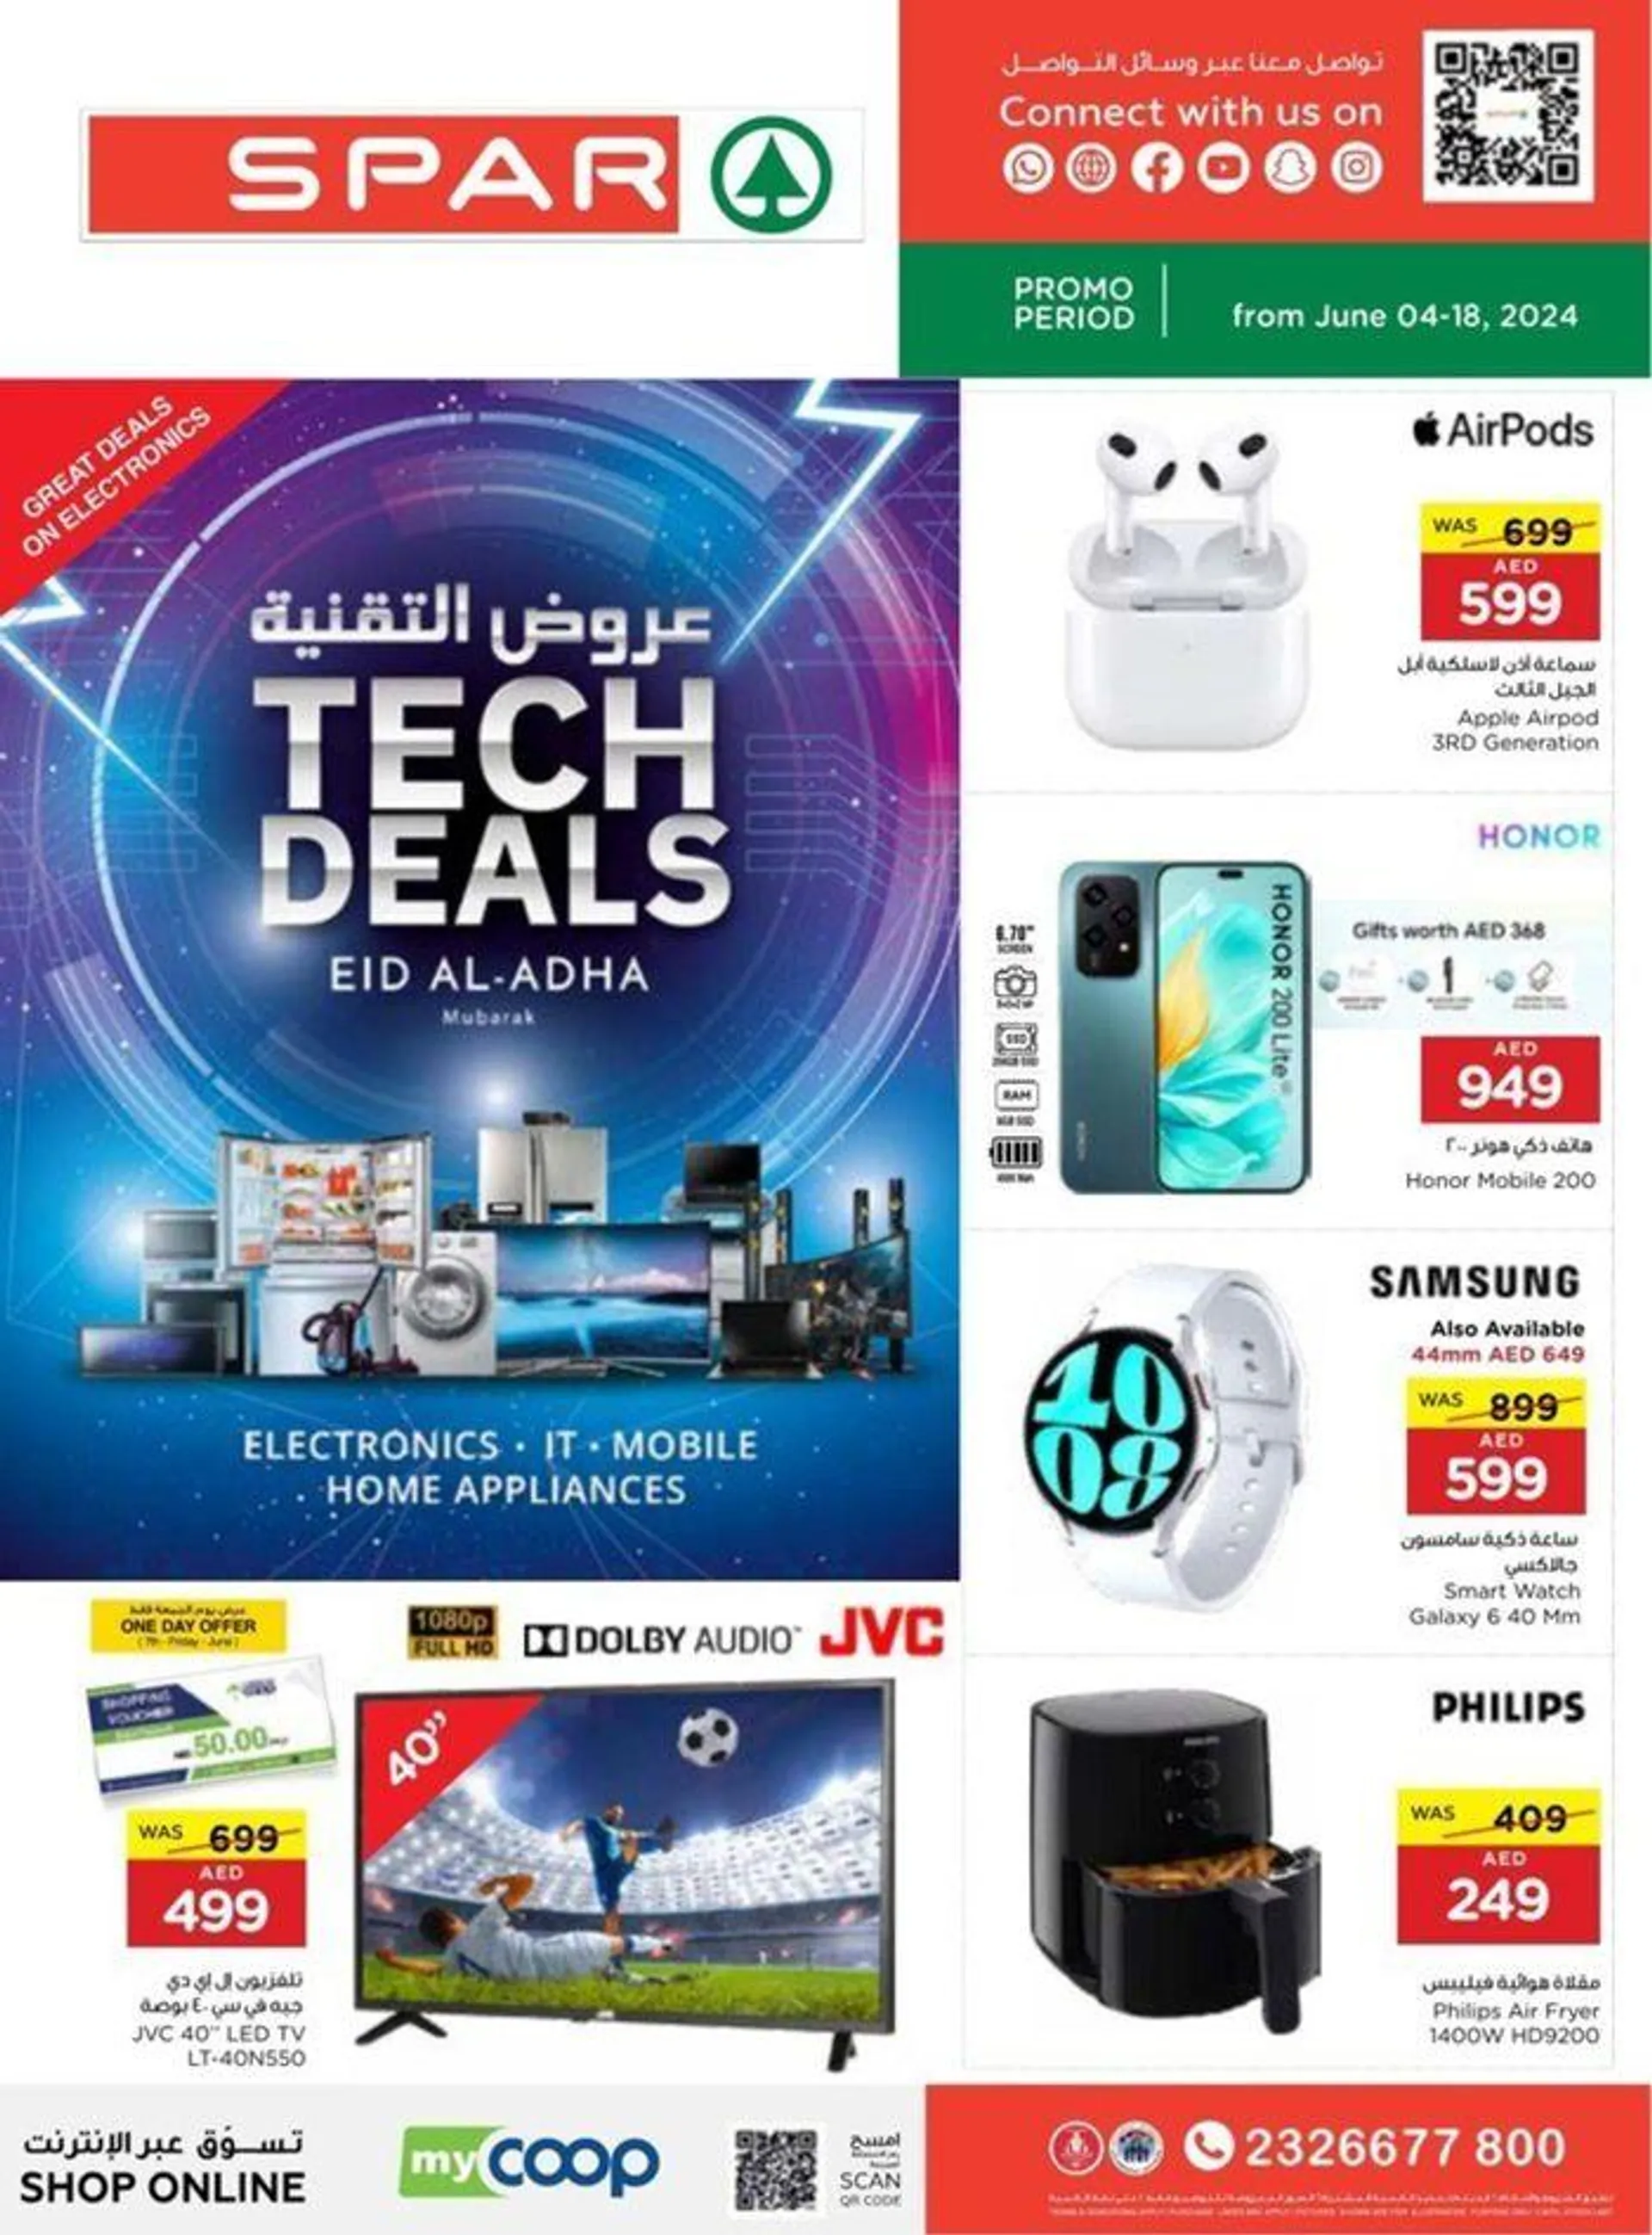 Spar Eid Al Adha Tech Deals - 1